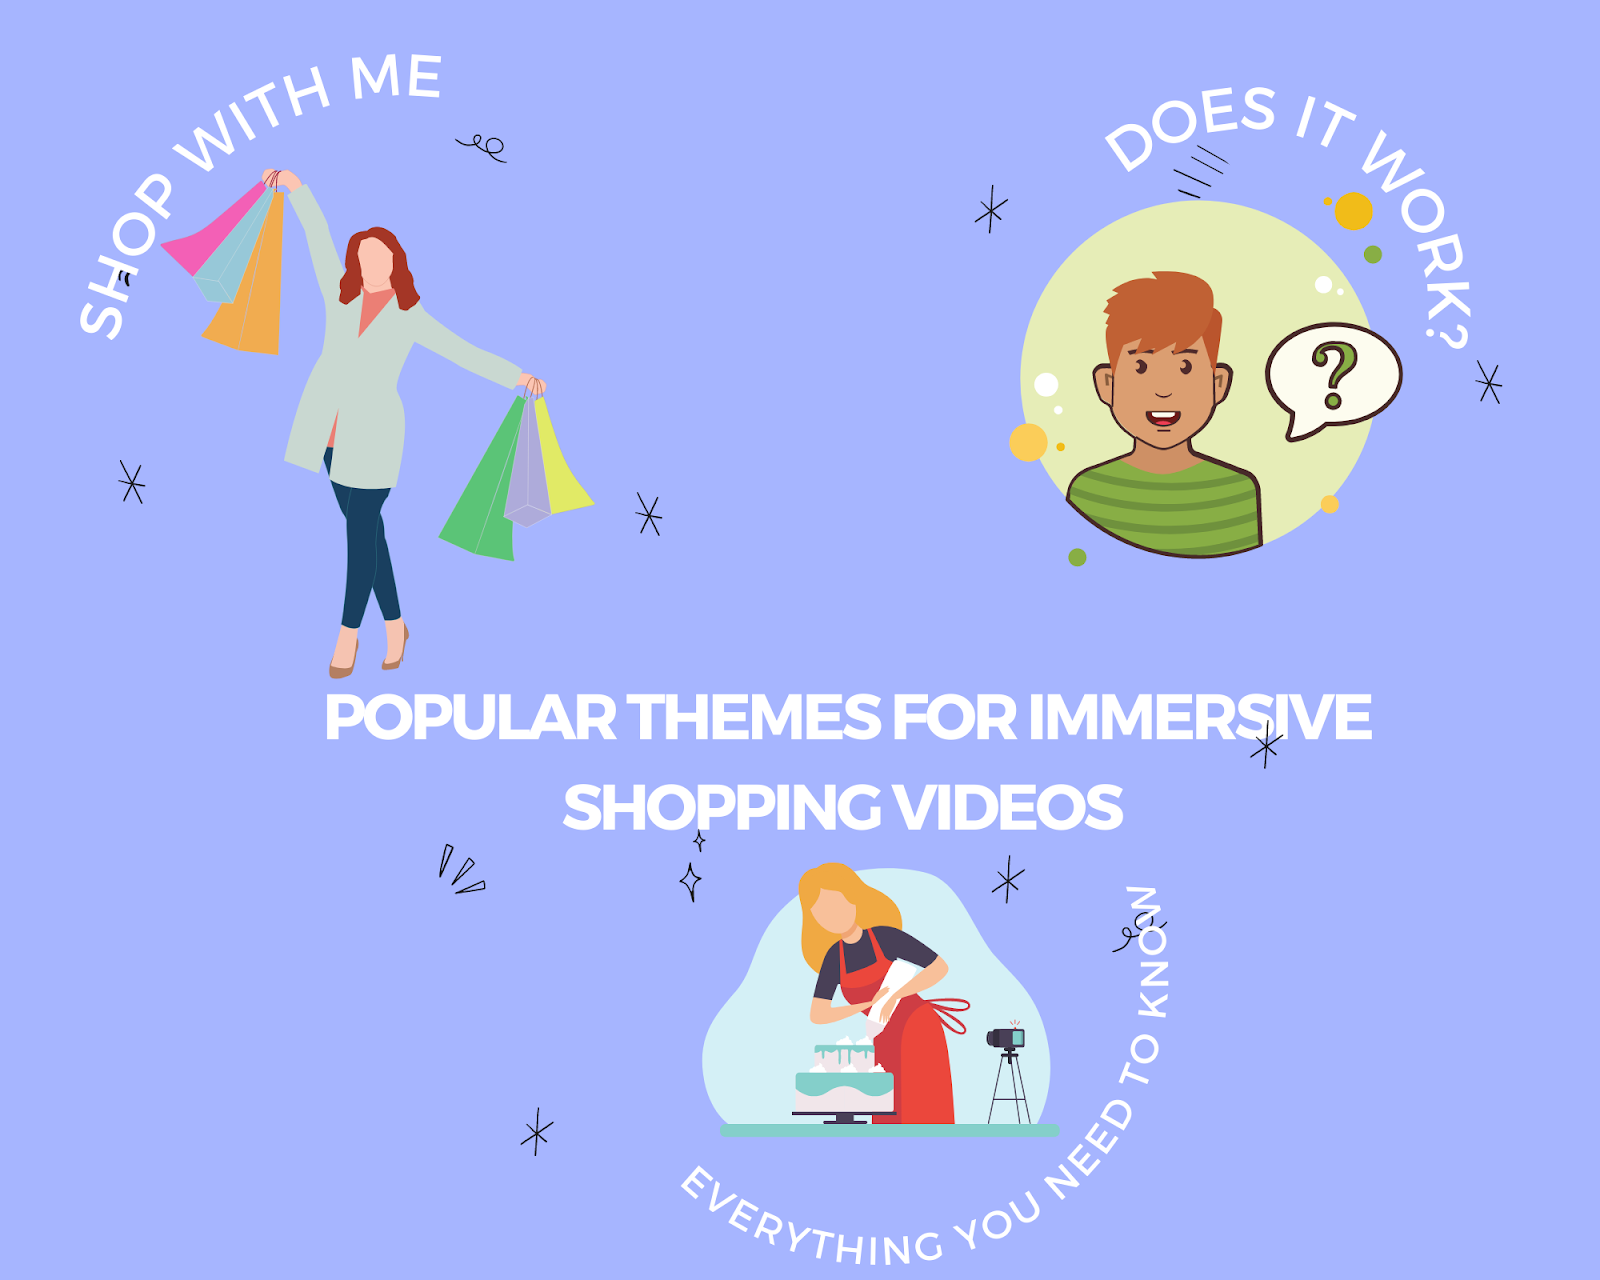 YouTube Immersive shopping trends 2021